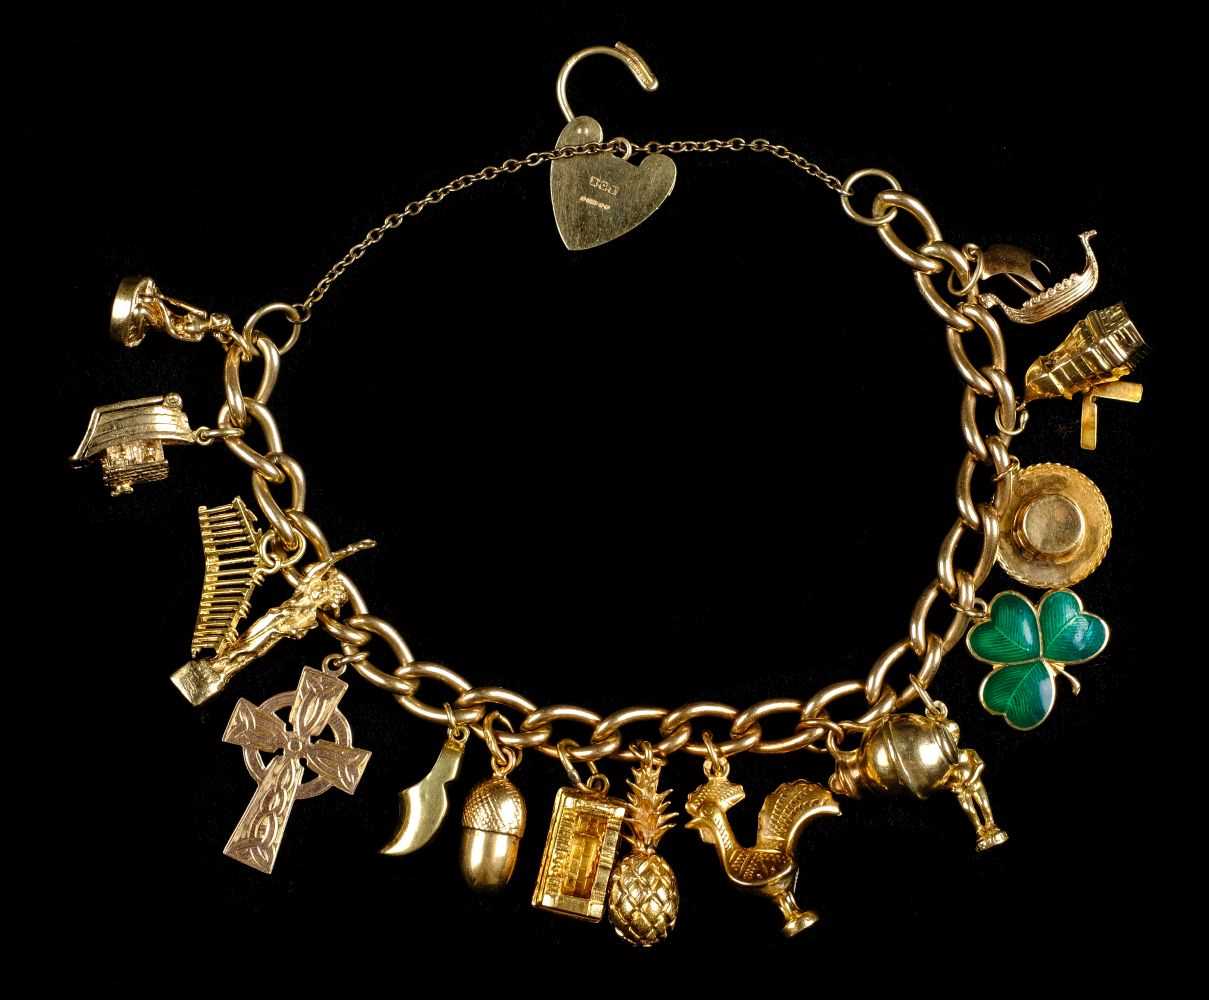 Lot 2 - Bracelet. A 9ct gold hollow link charm bracelet